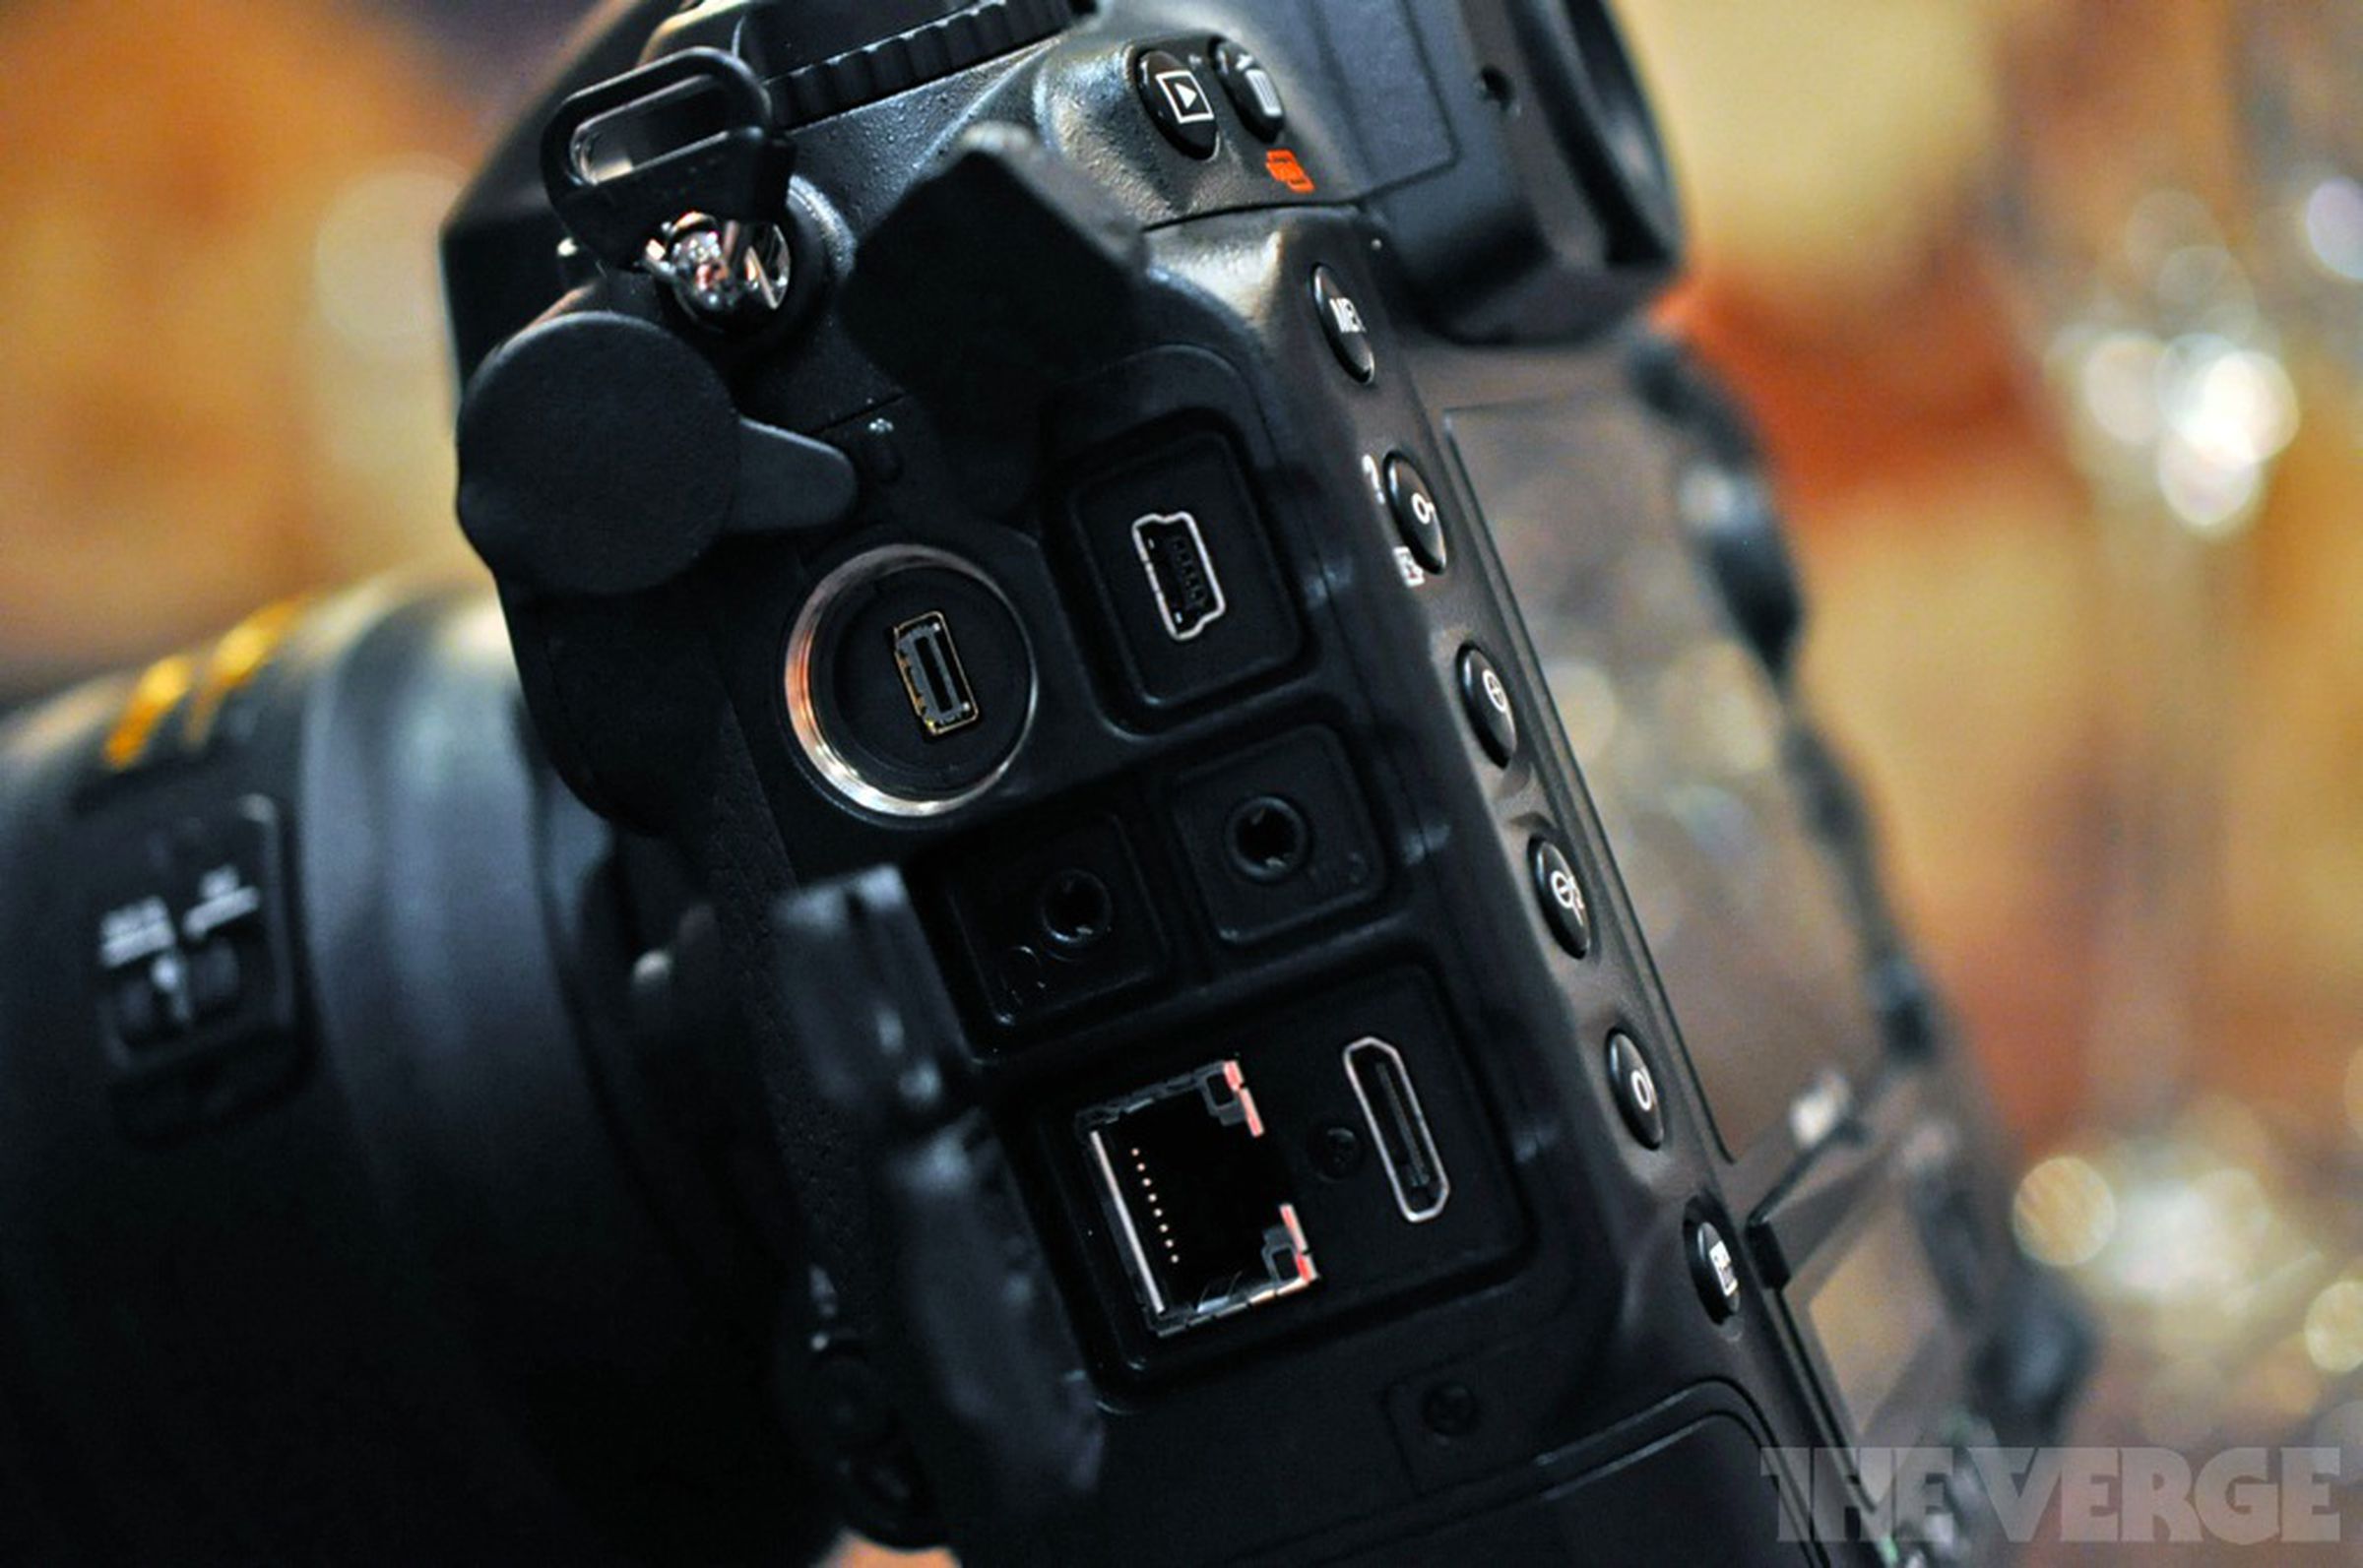 Nikon D4 hands-on gallery